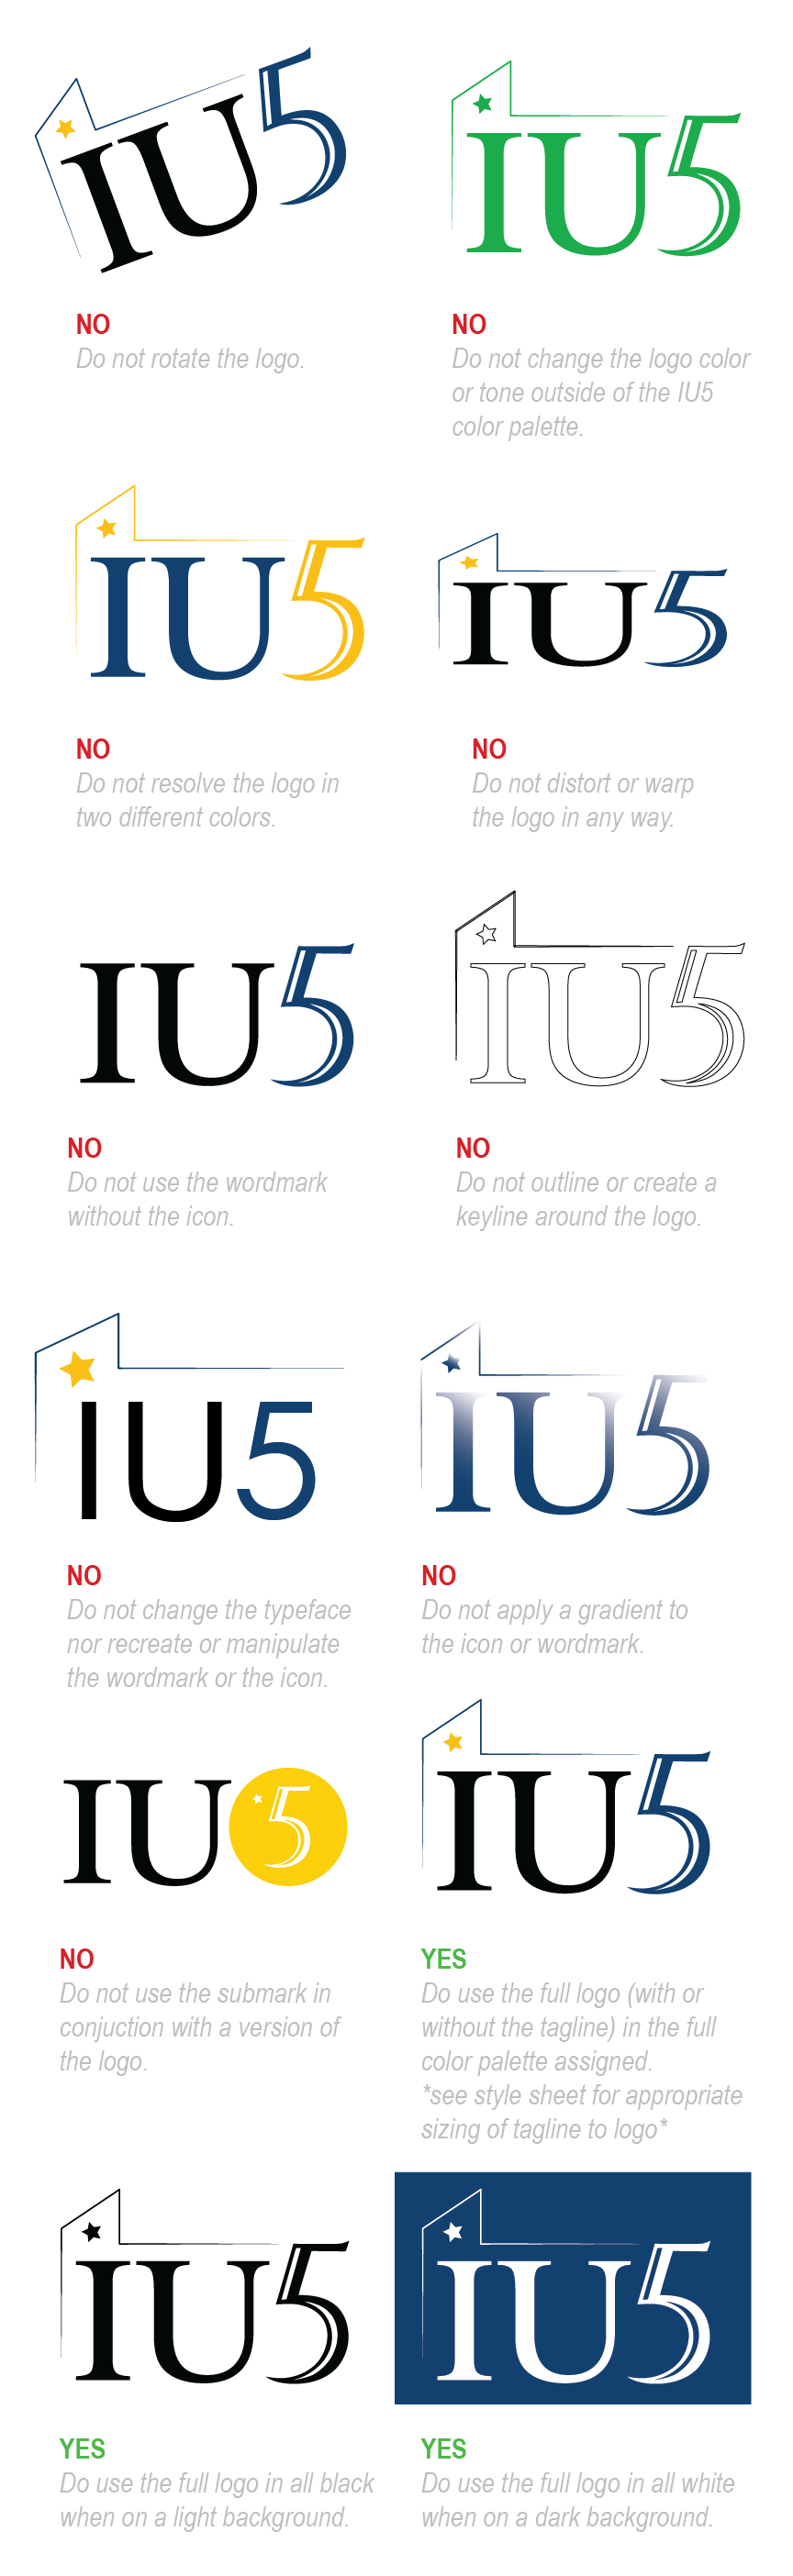 IU5 logo misuse image examples